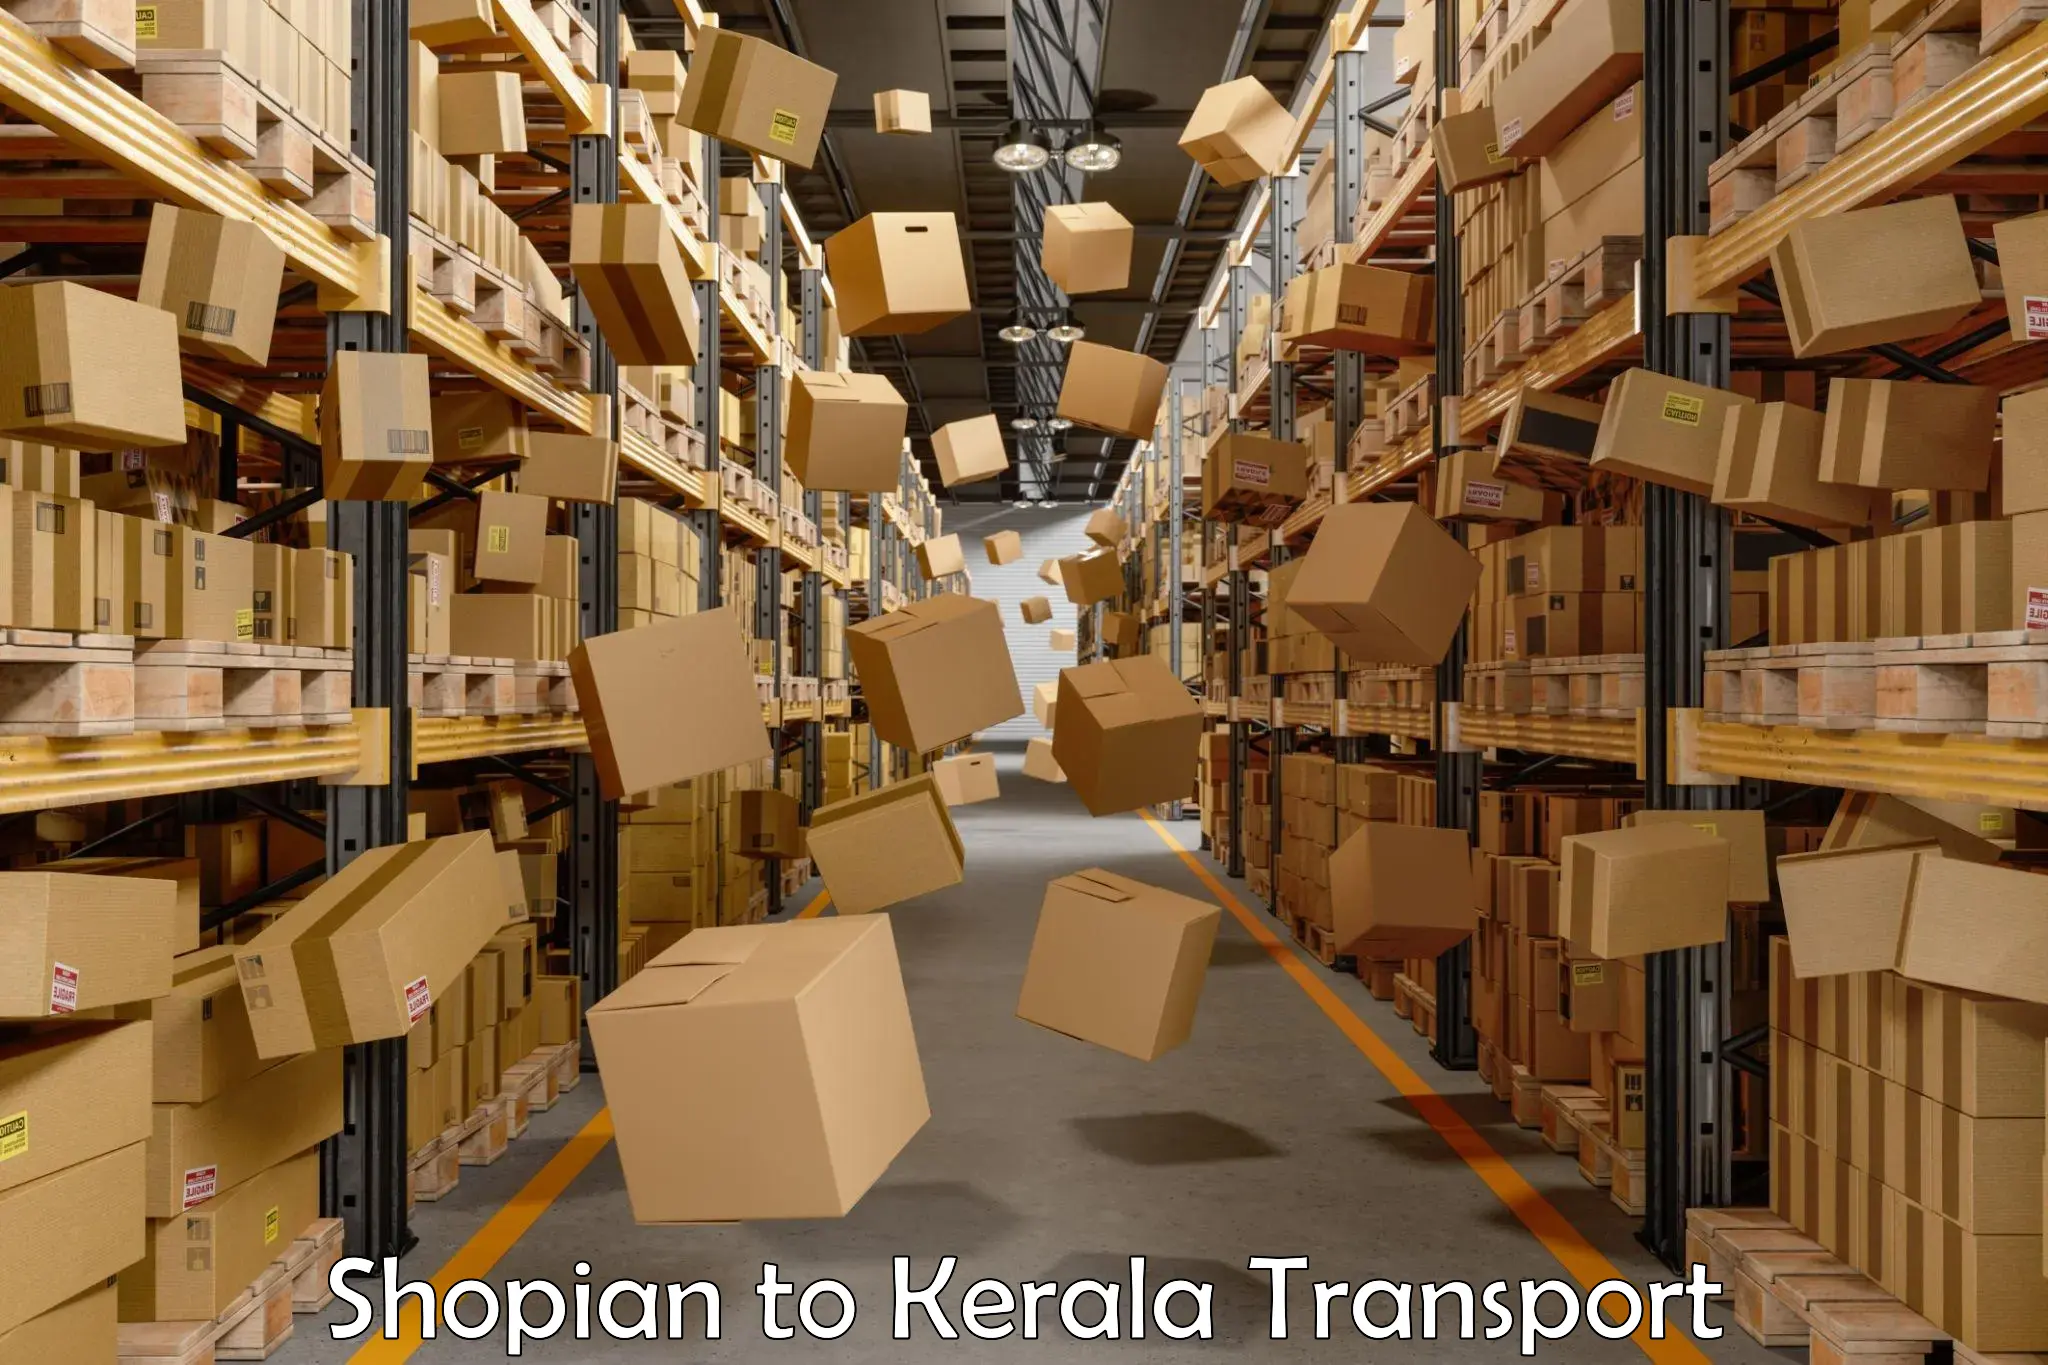 Transport in sharing Shopian to Kozhikode